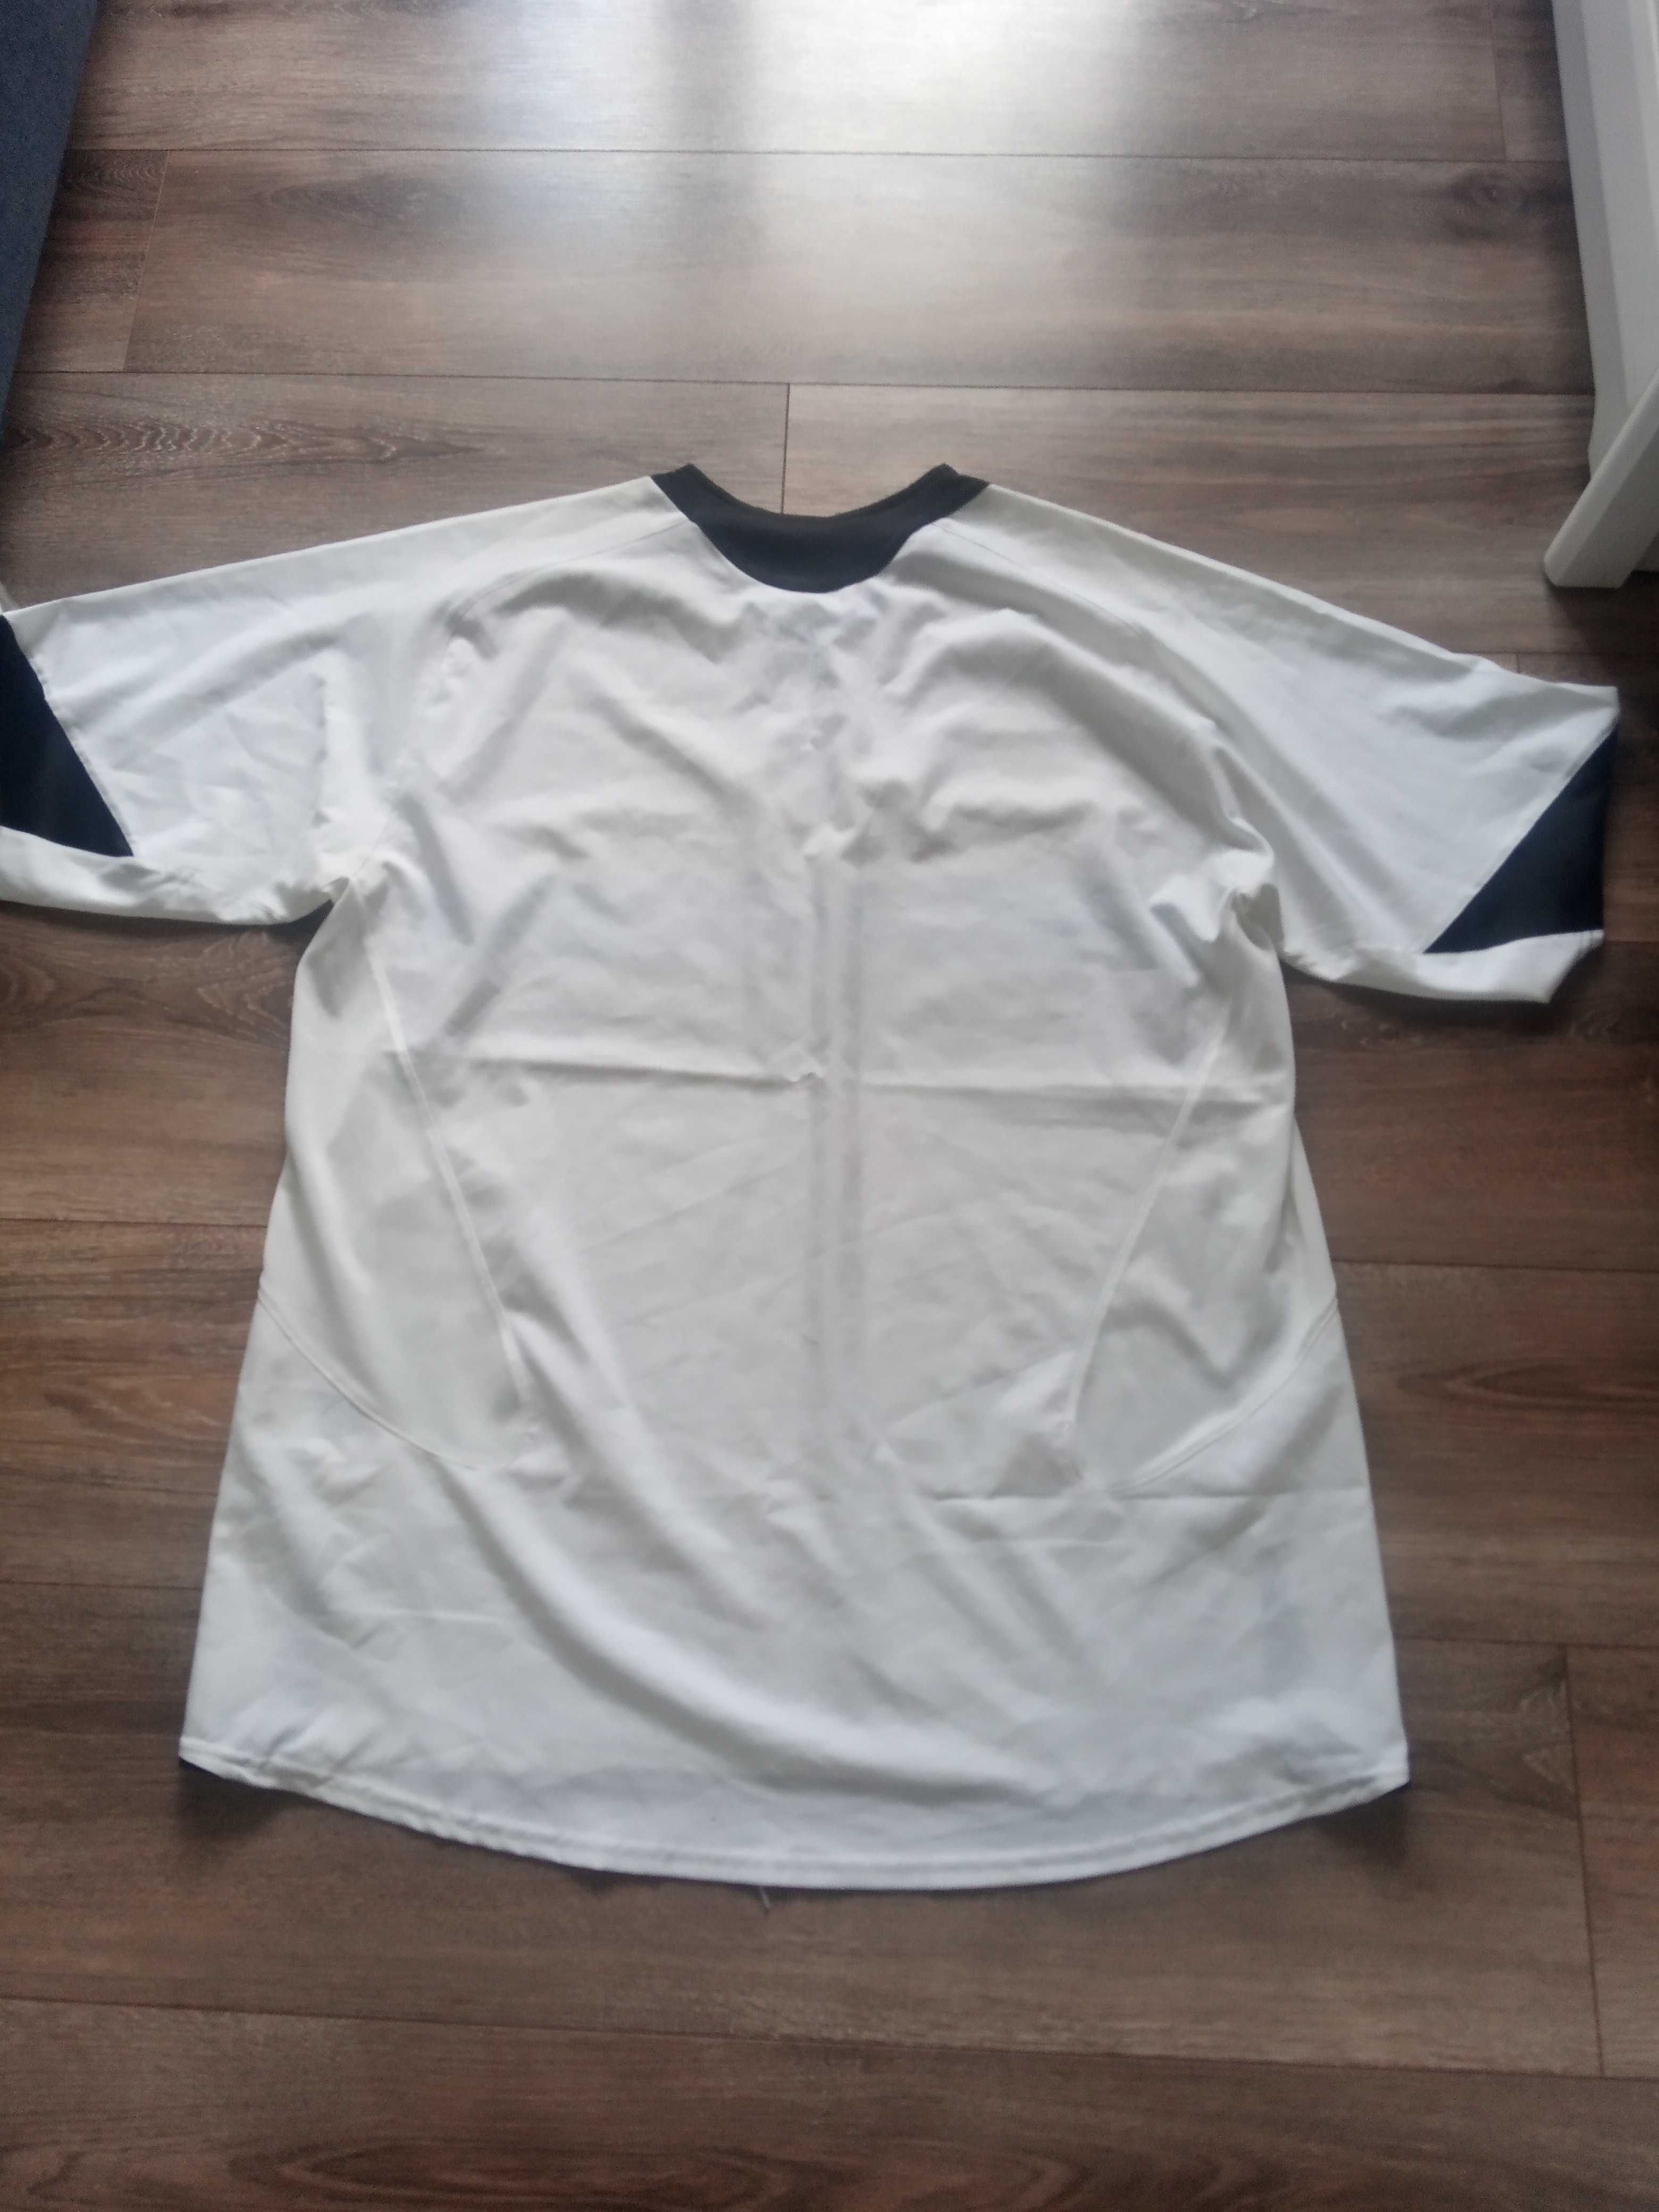 Oryginalna Koszulka Inter Mediolan 2005/2006 size XL stan bdb jak nowa